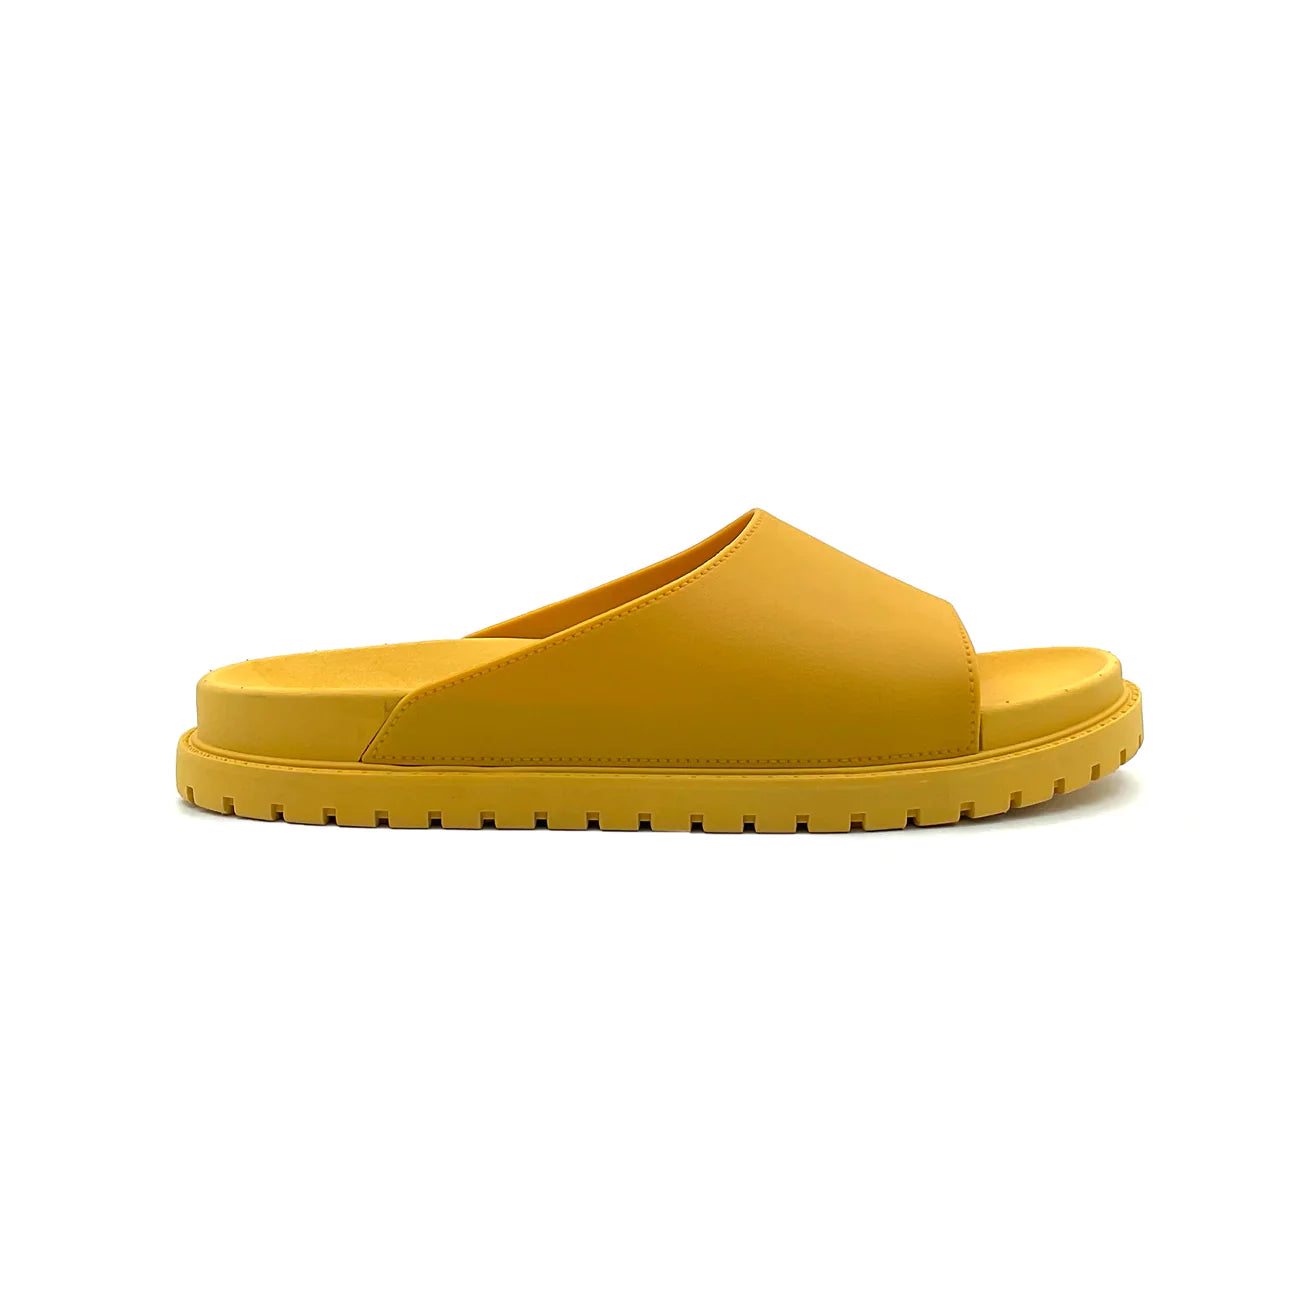 Troa Casual Slide Sandals